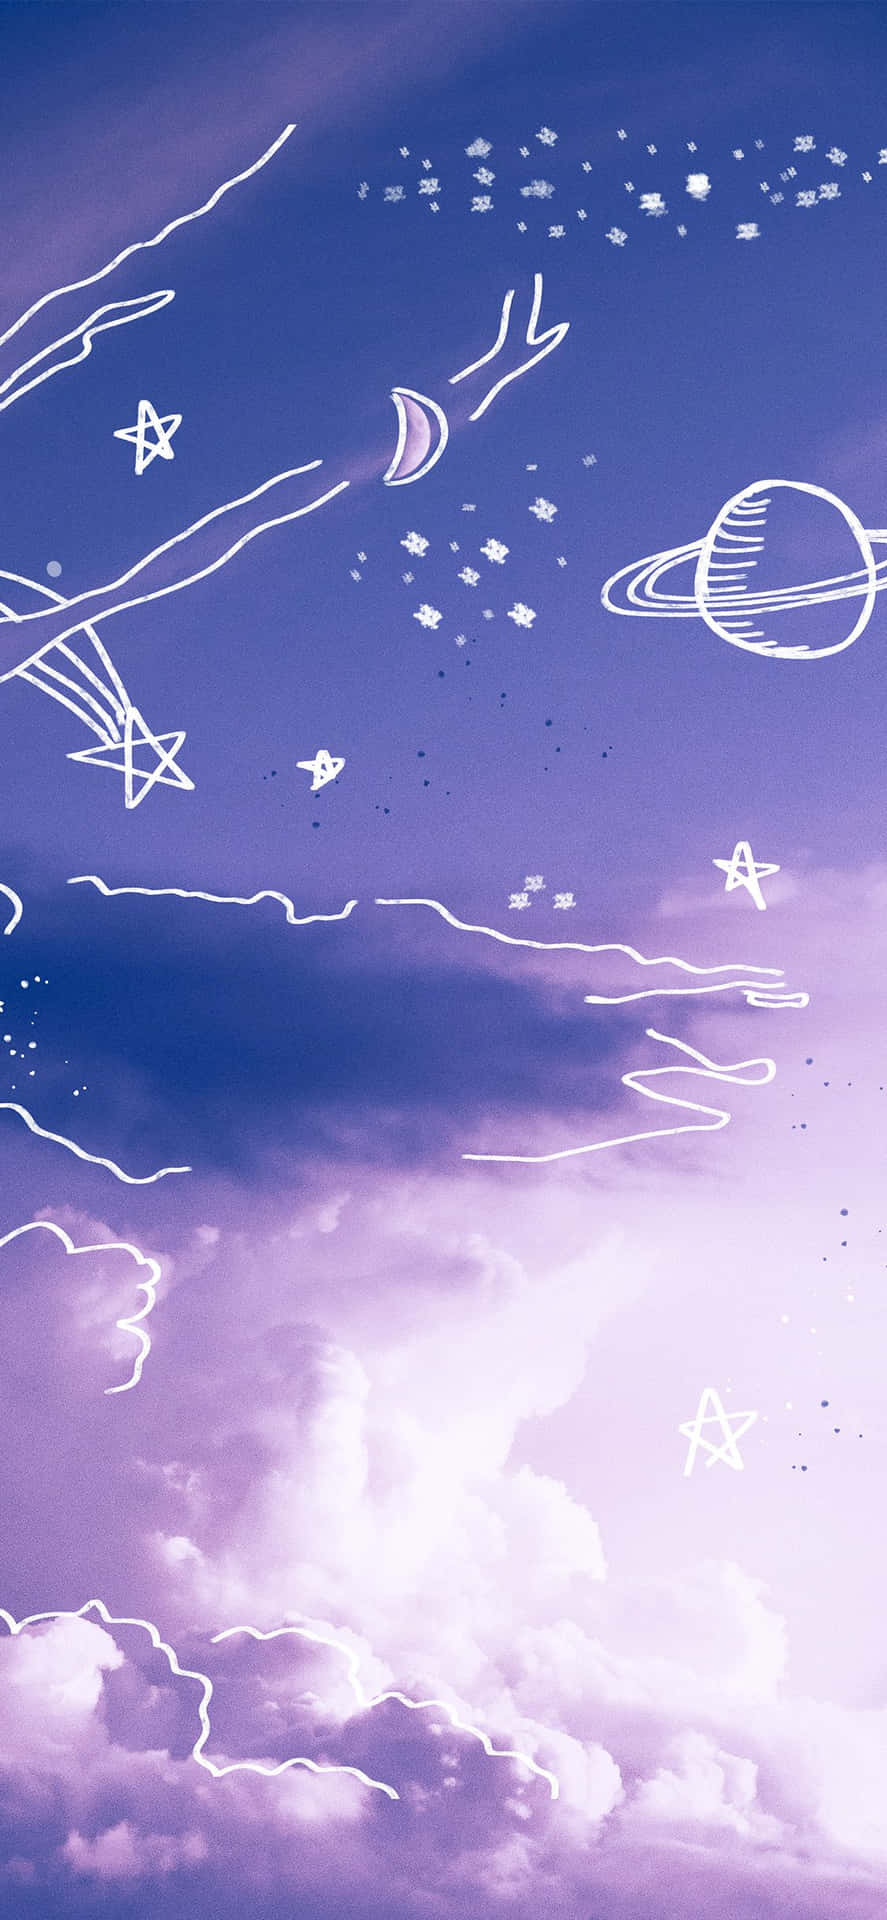 Aesthetic Sky Doodle Art Purple Pastel iPhone Wallpaper